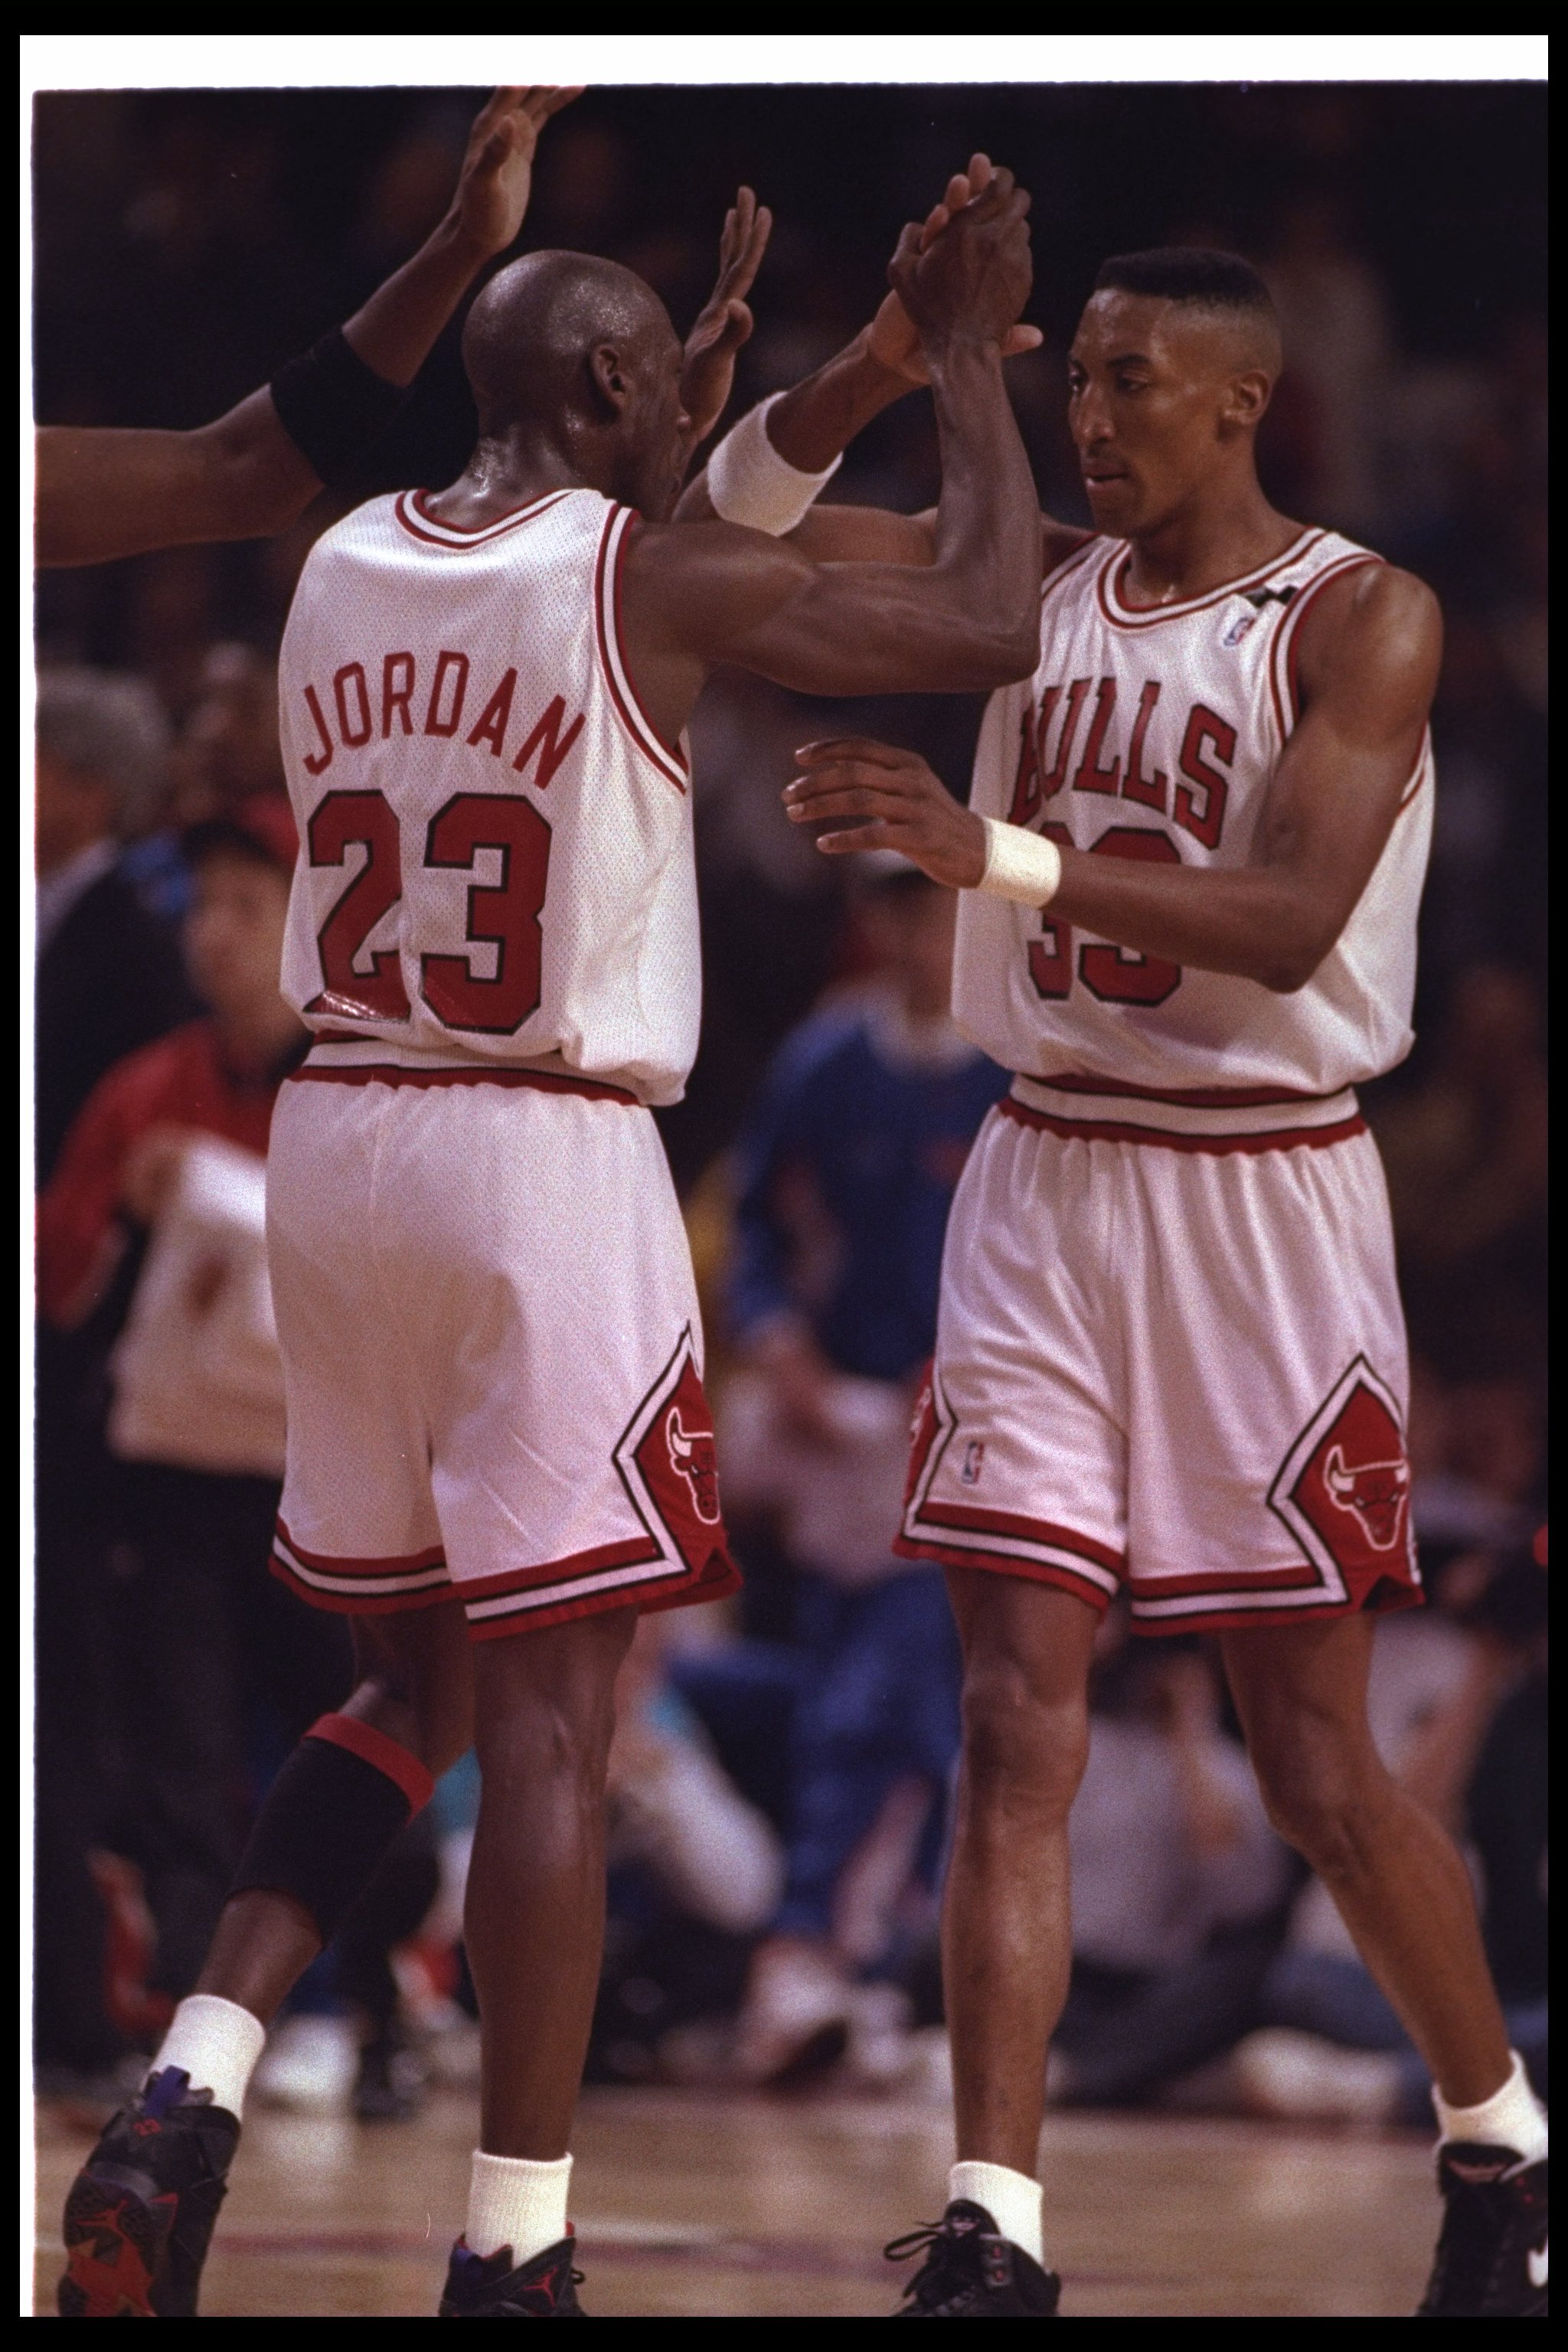 Jordan: Winning 6th NBA title with Bulls was 'trying year